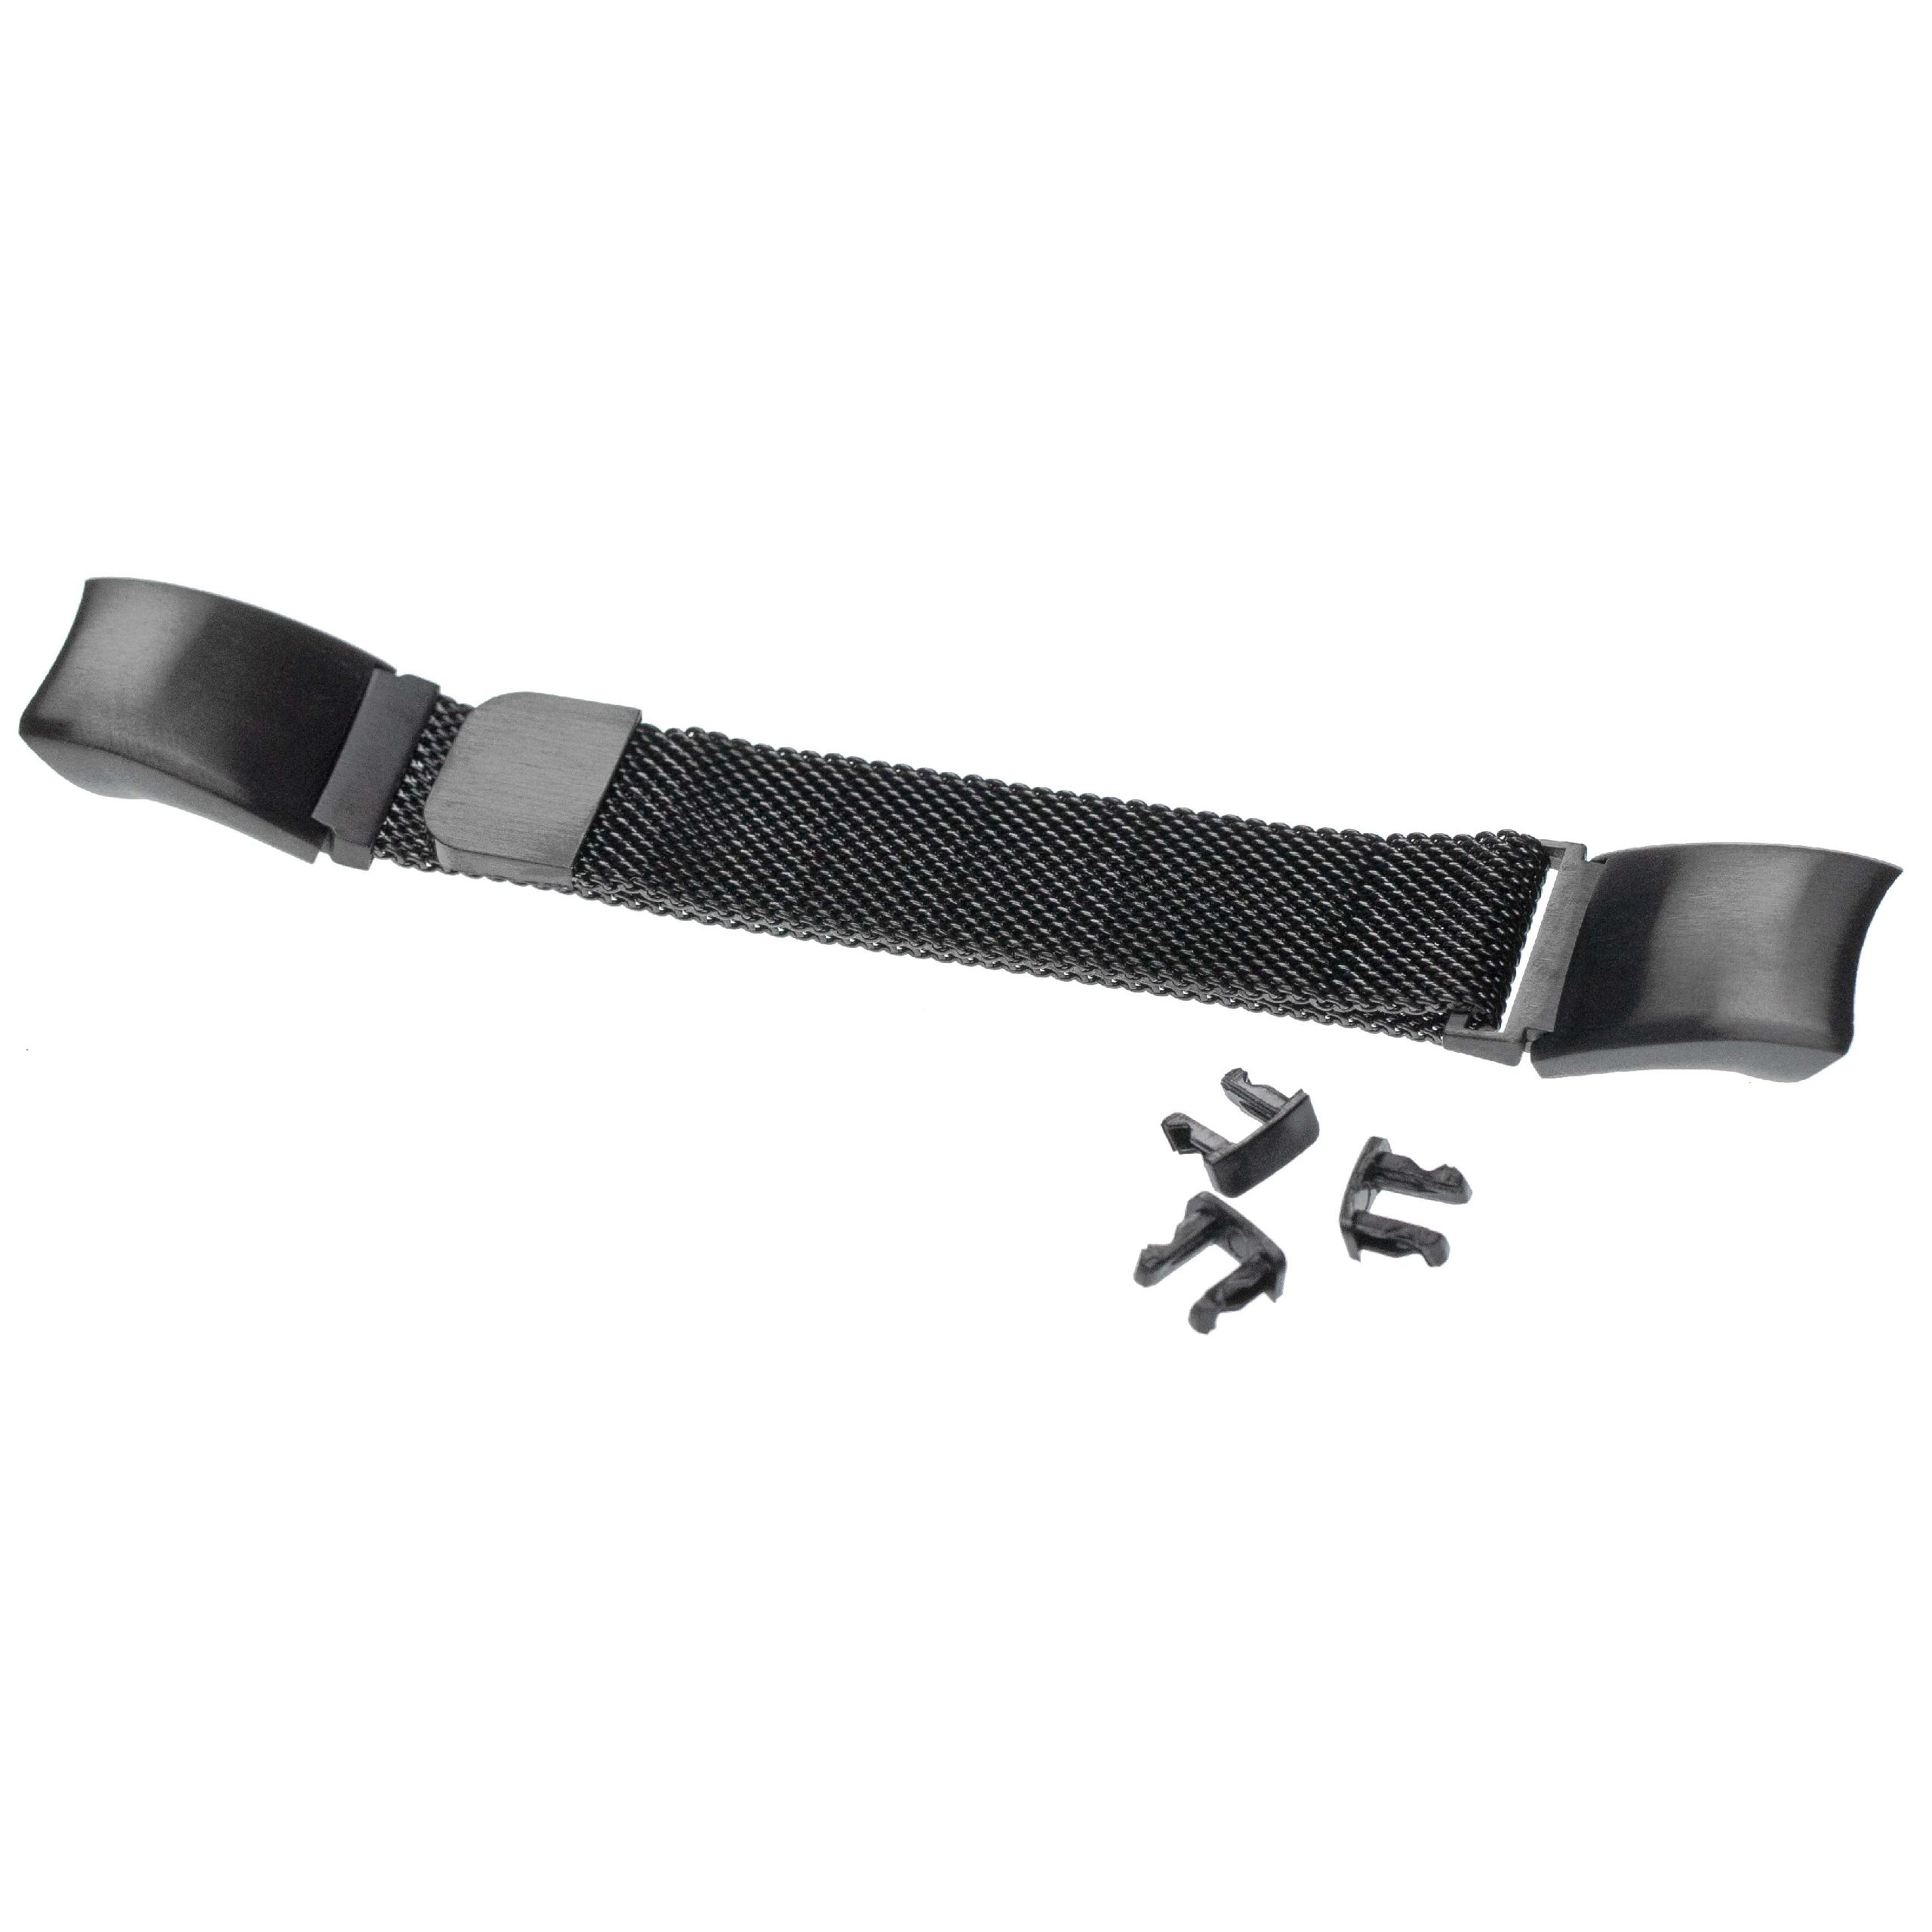 Armband für Huawei Honor Band 4 / Honor Band 5 Smartwatch - 23 cm lang, 16mm breit, Edelstahl, schwarz